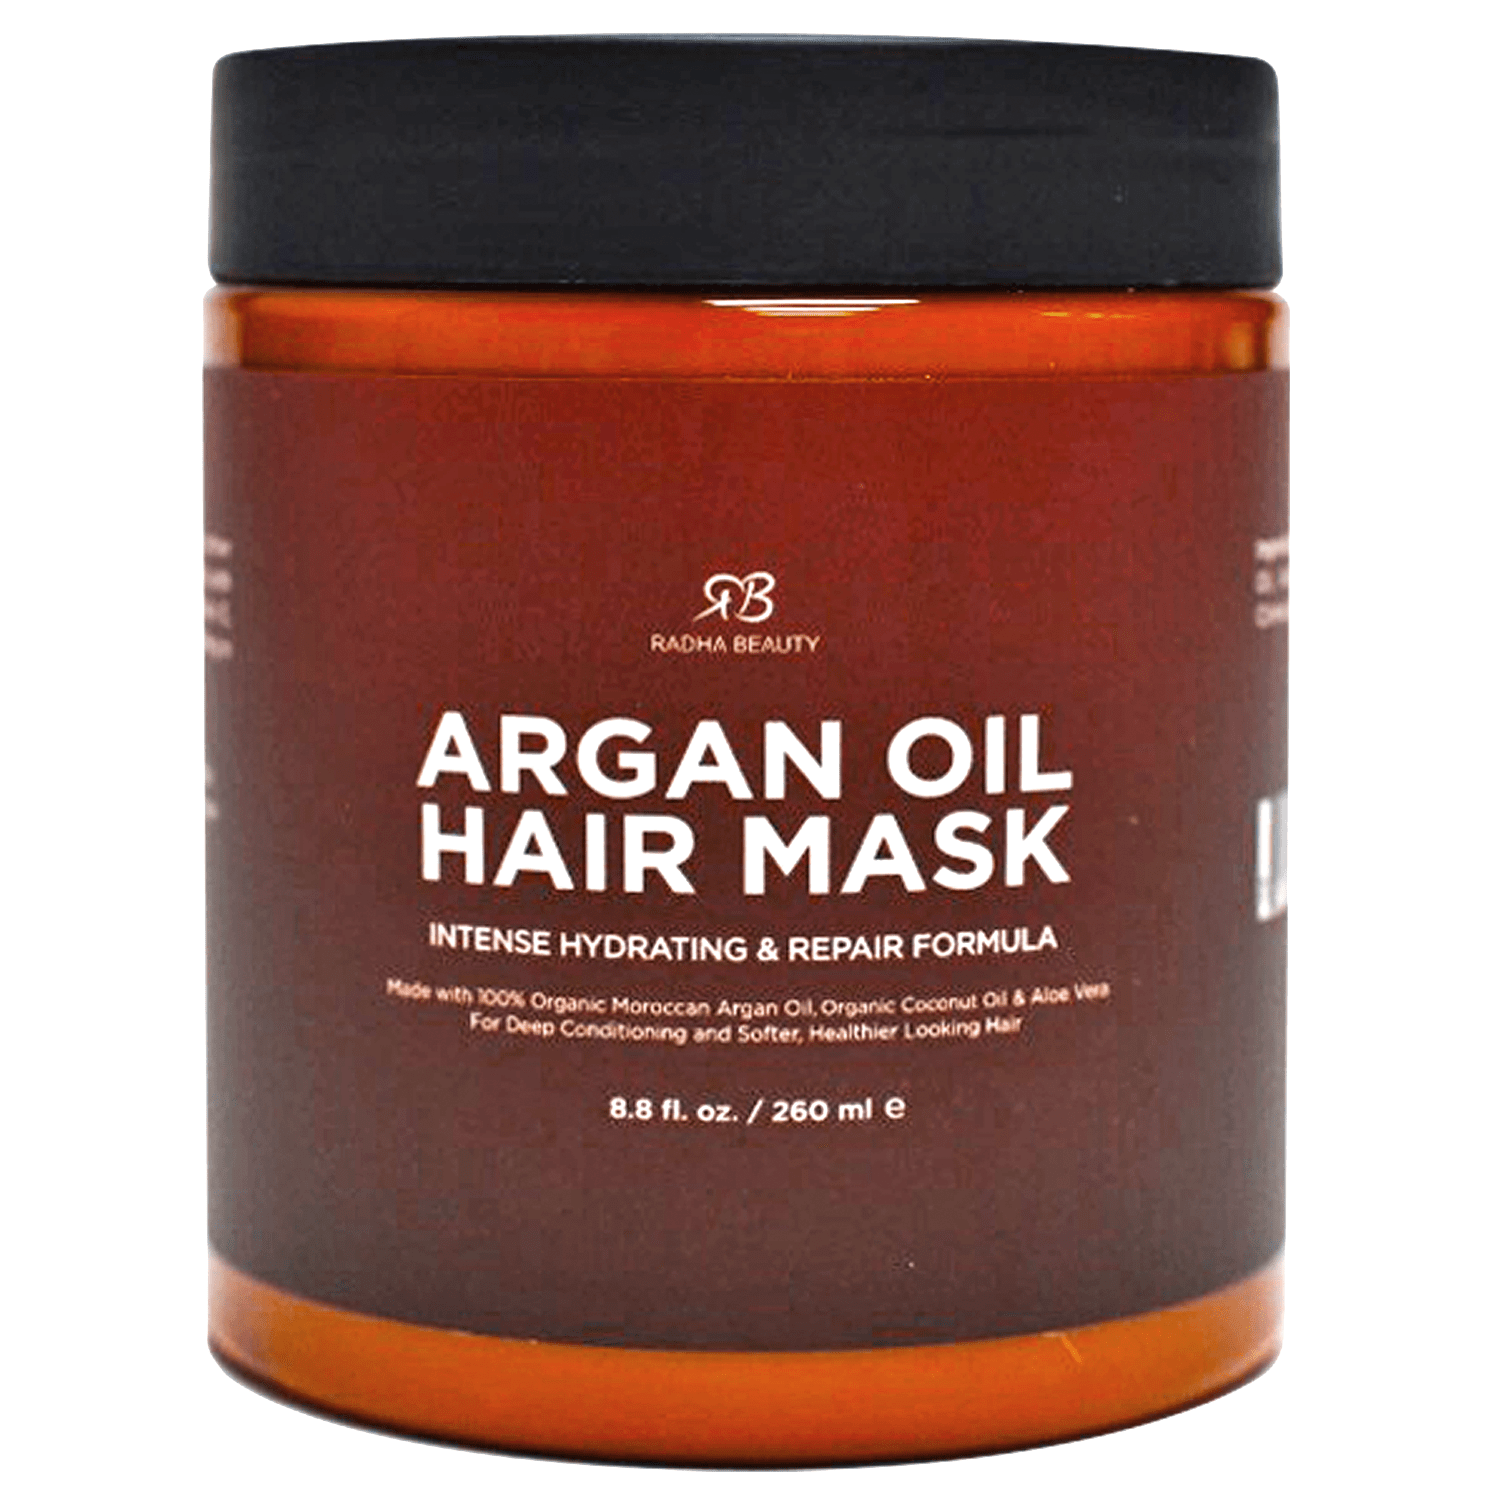 Radha Beauty Argan Oil Hair Mask